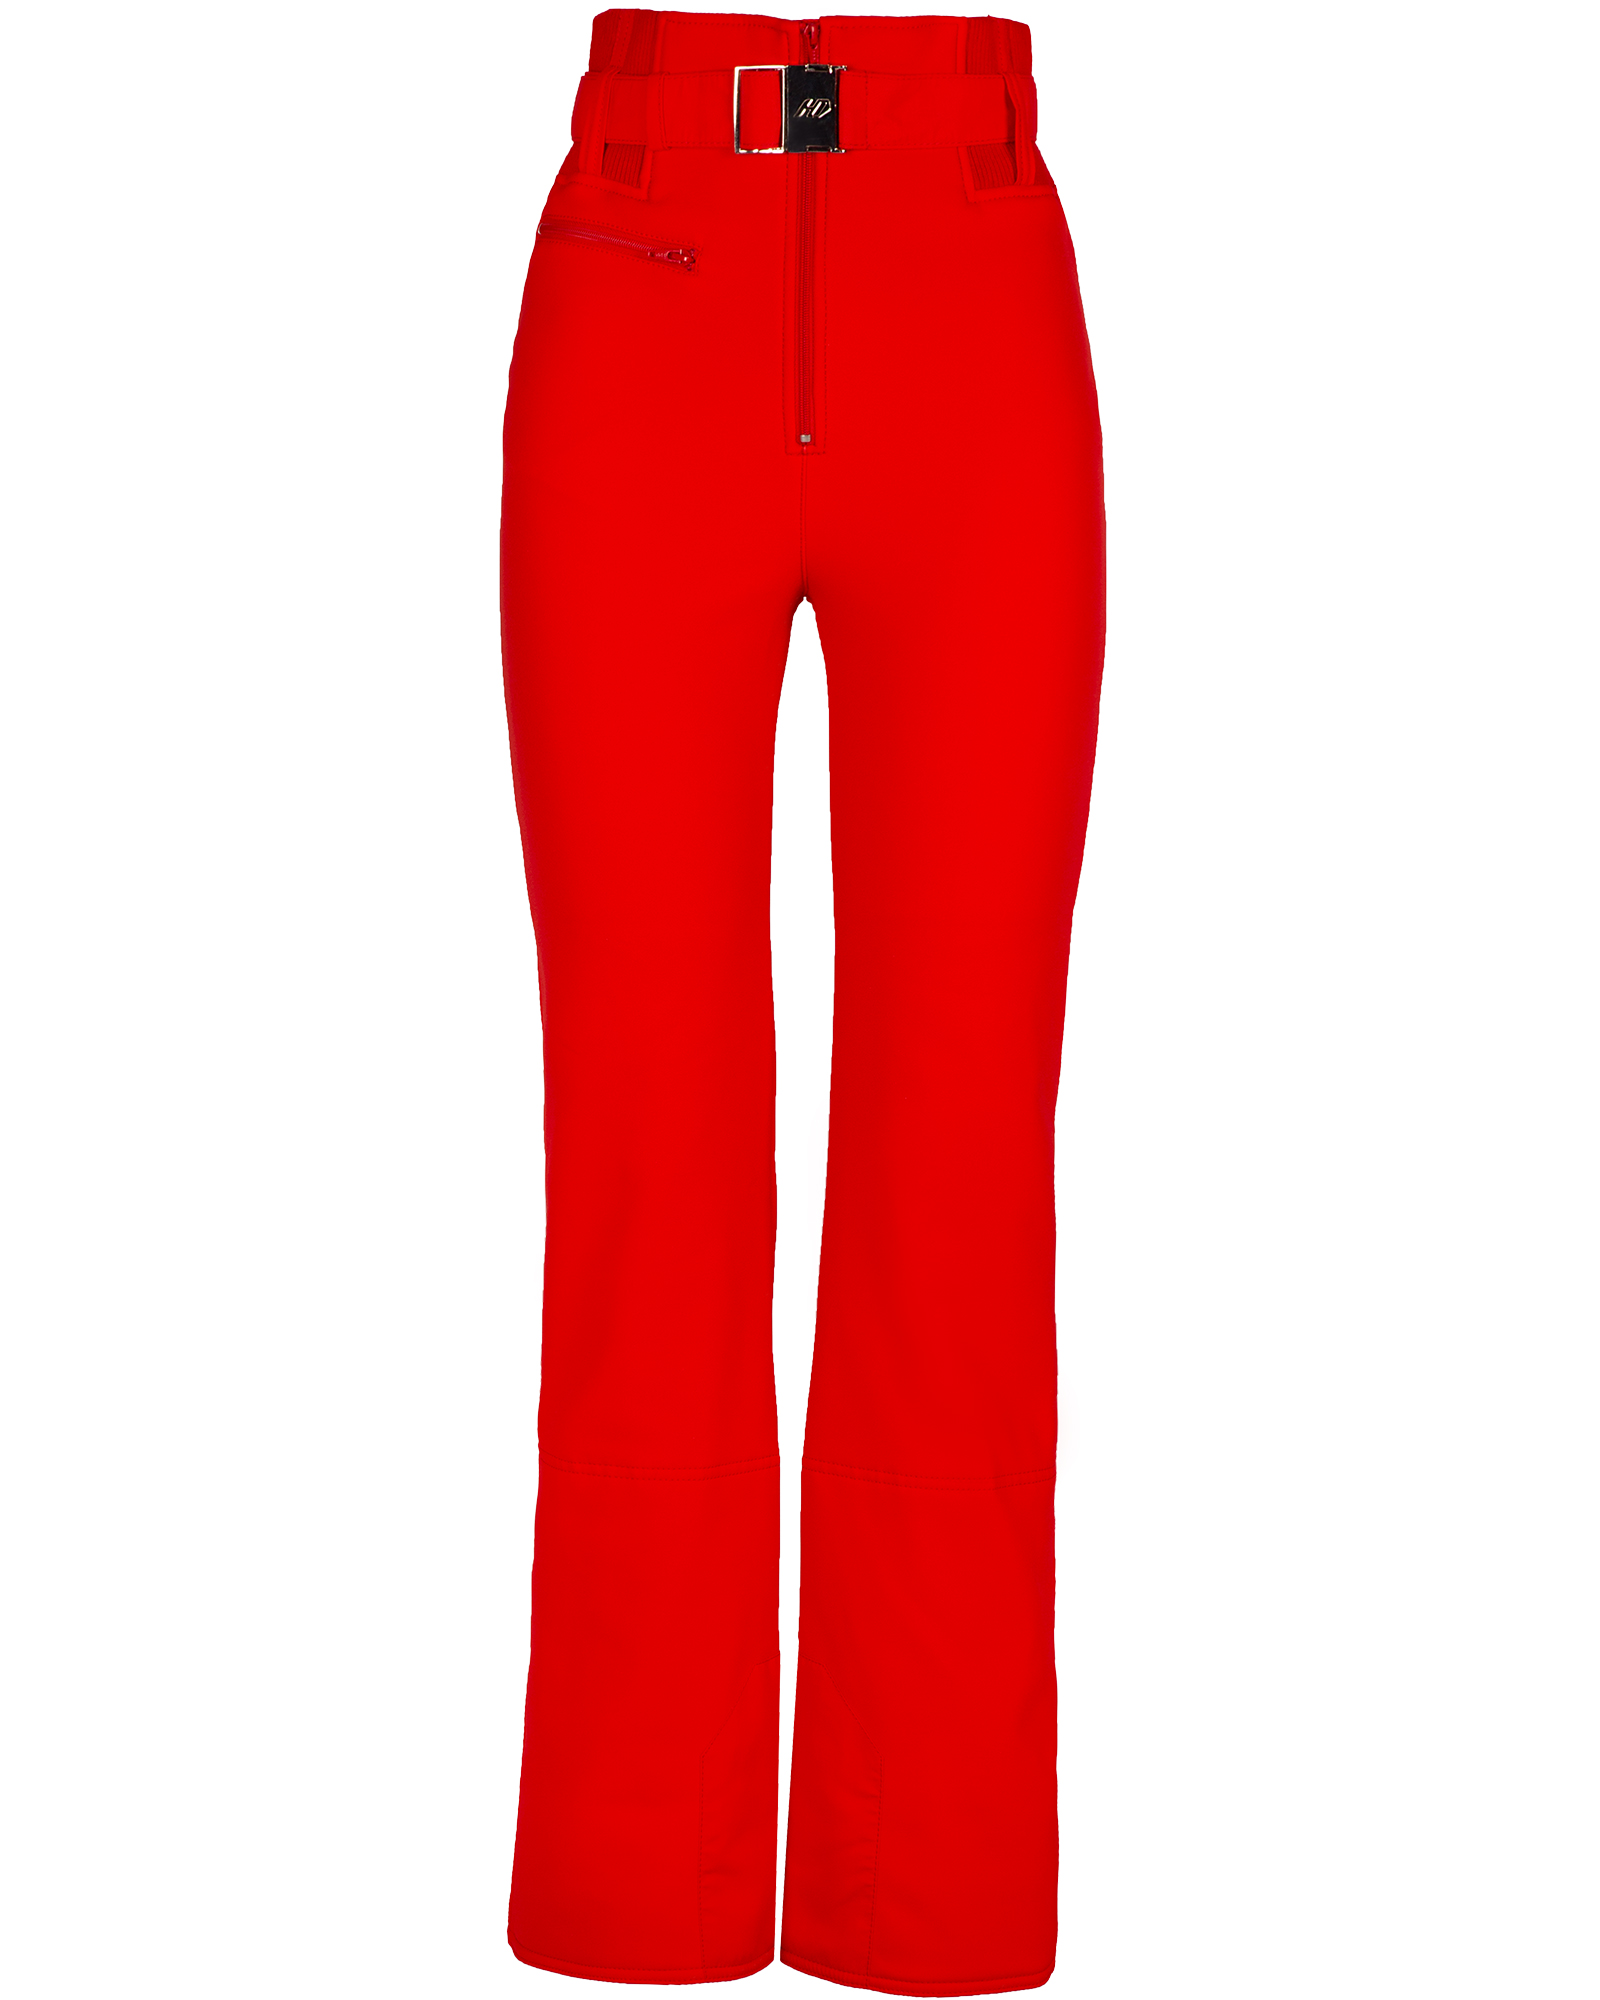 Duvillard Gridin Women’s Pants - Red 8